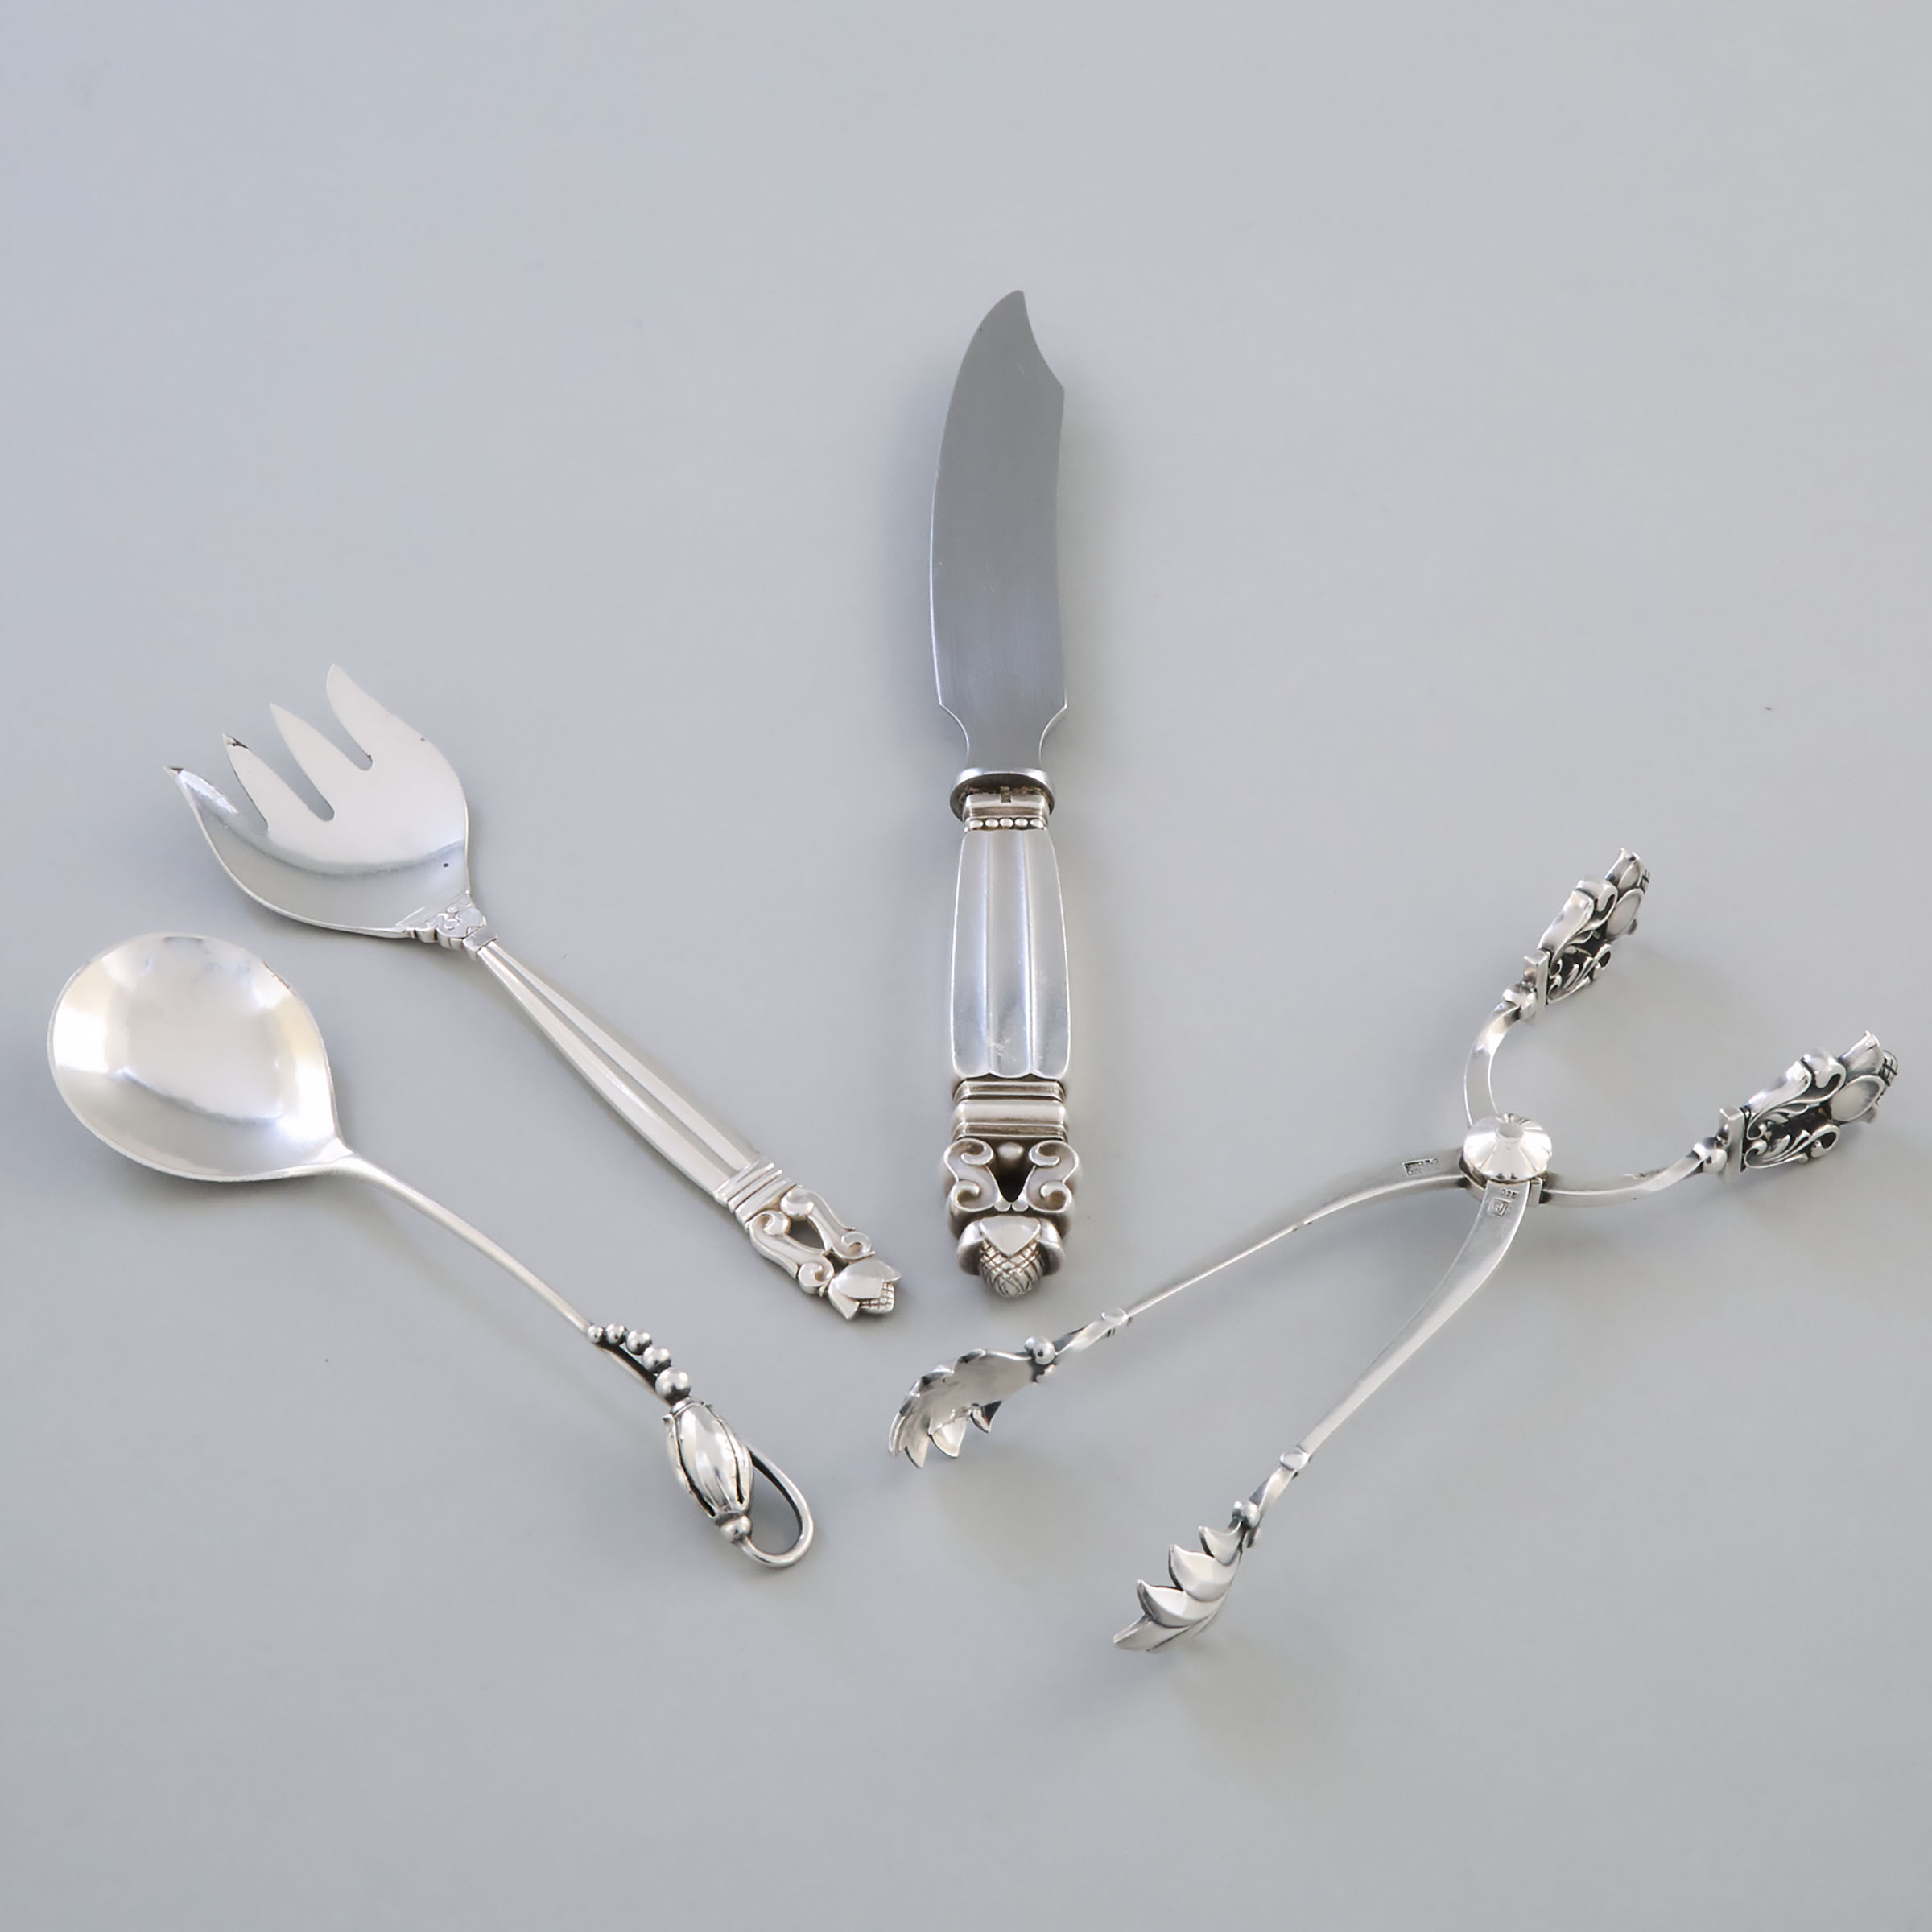 Danish Silver ‘Acorn’ Pattern Cheese Knife, Sardine Fork and Sugar Tongs, and a 'Blossom' Pattern Spoon, Georg Jensen, Copenhagen, c.1933-44